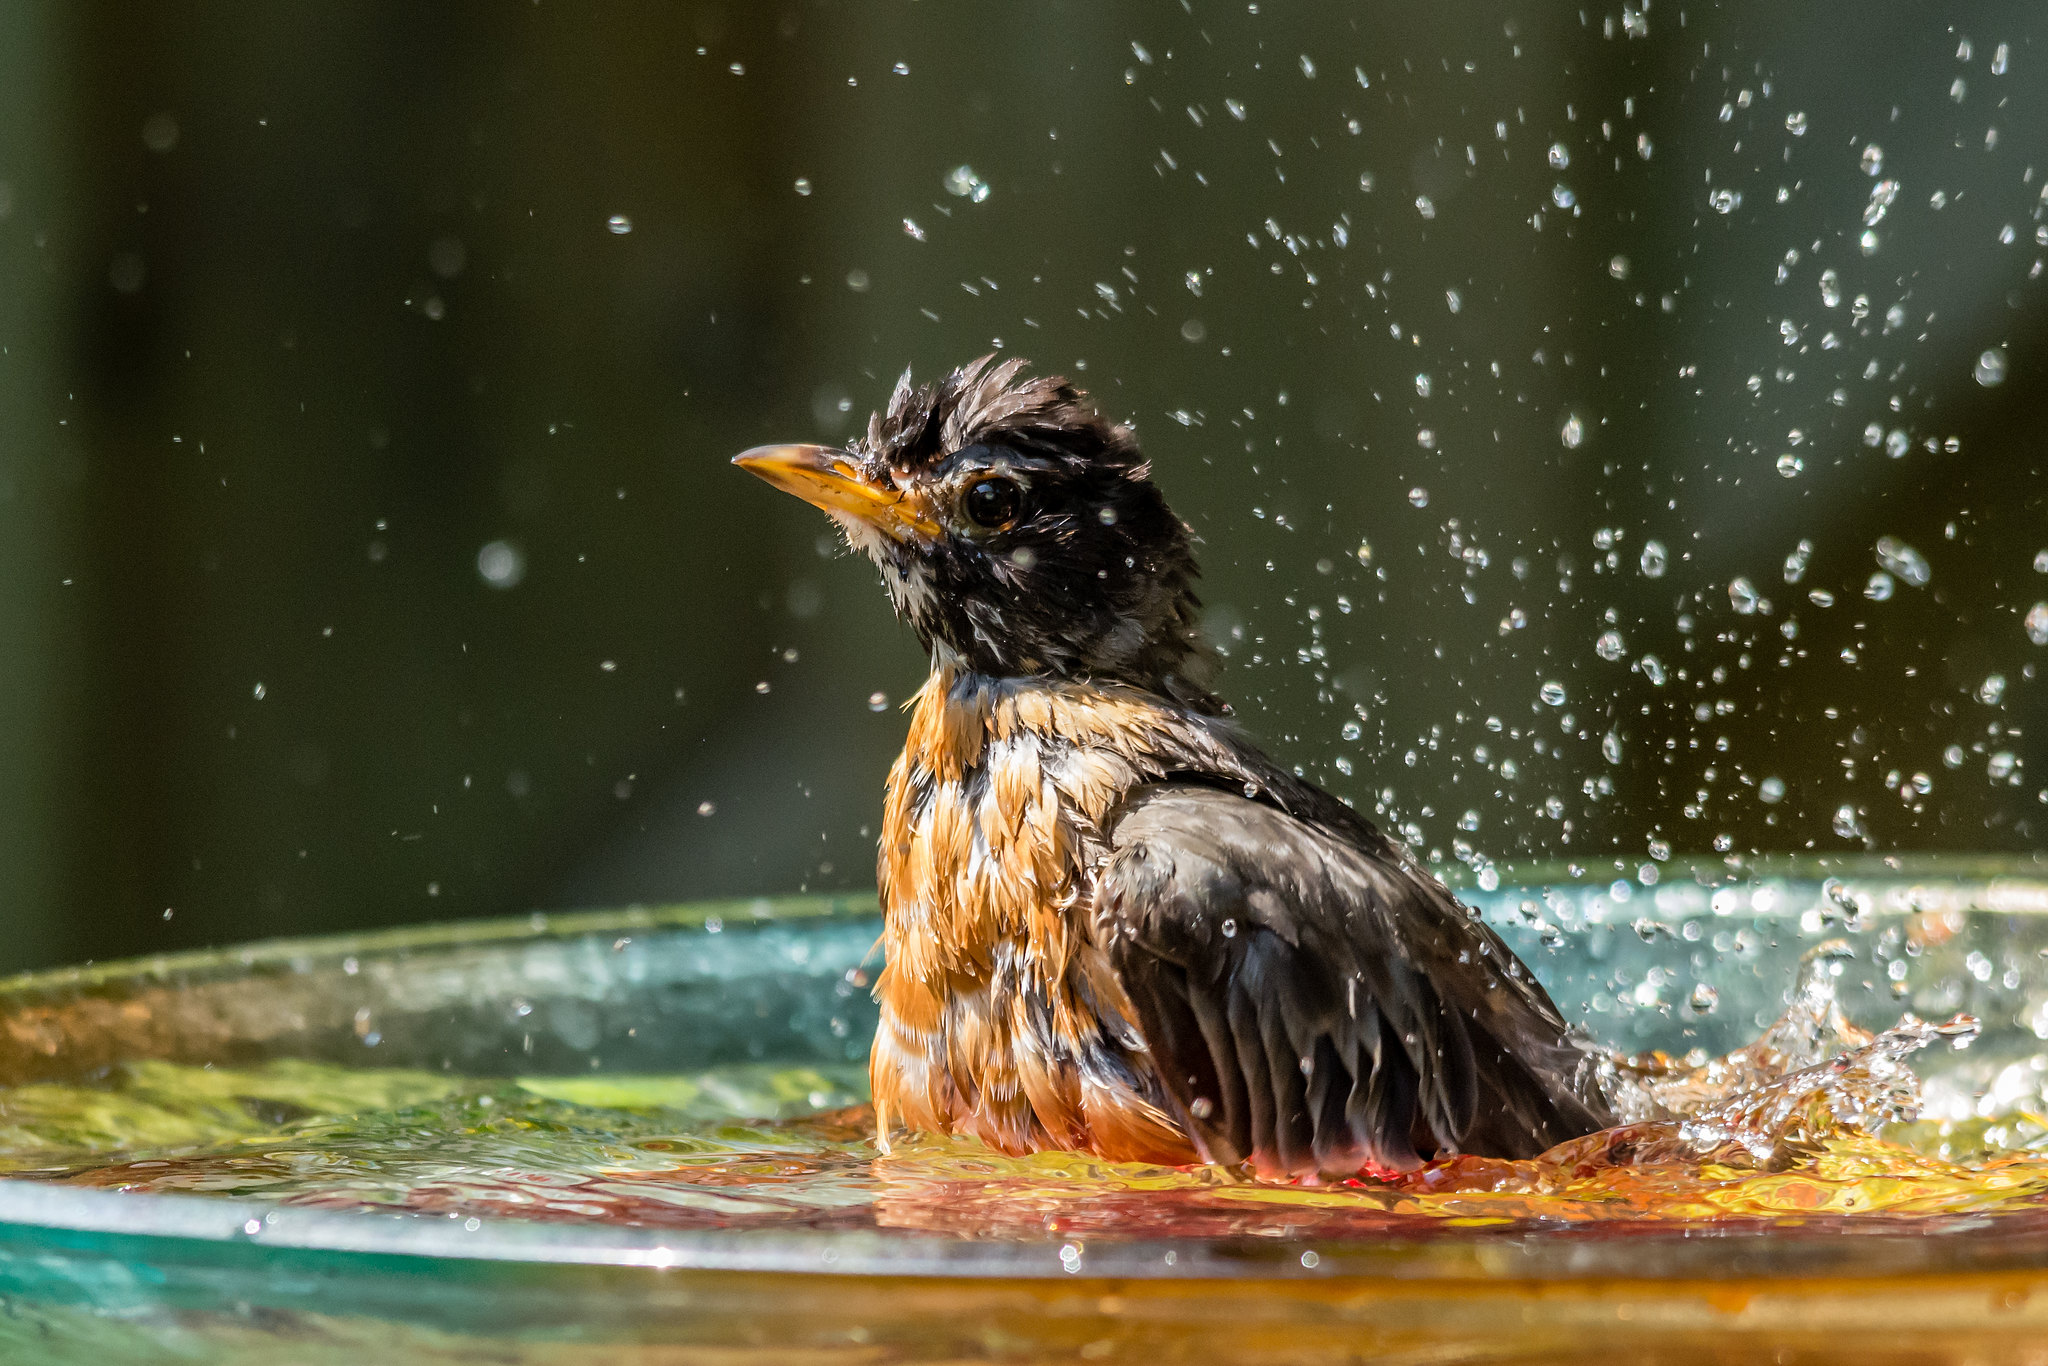 Reasons why birds may not use a bird bath